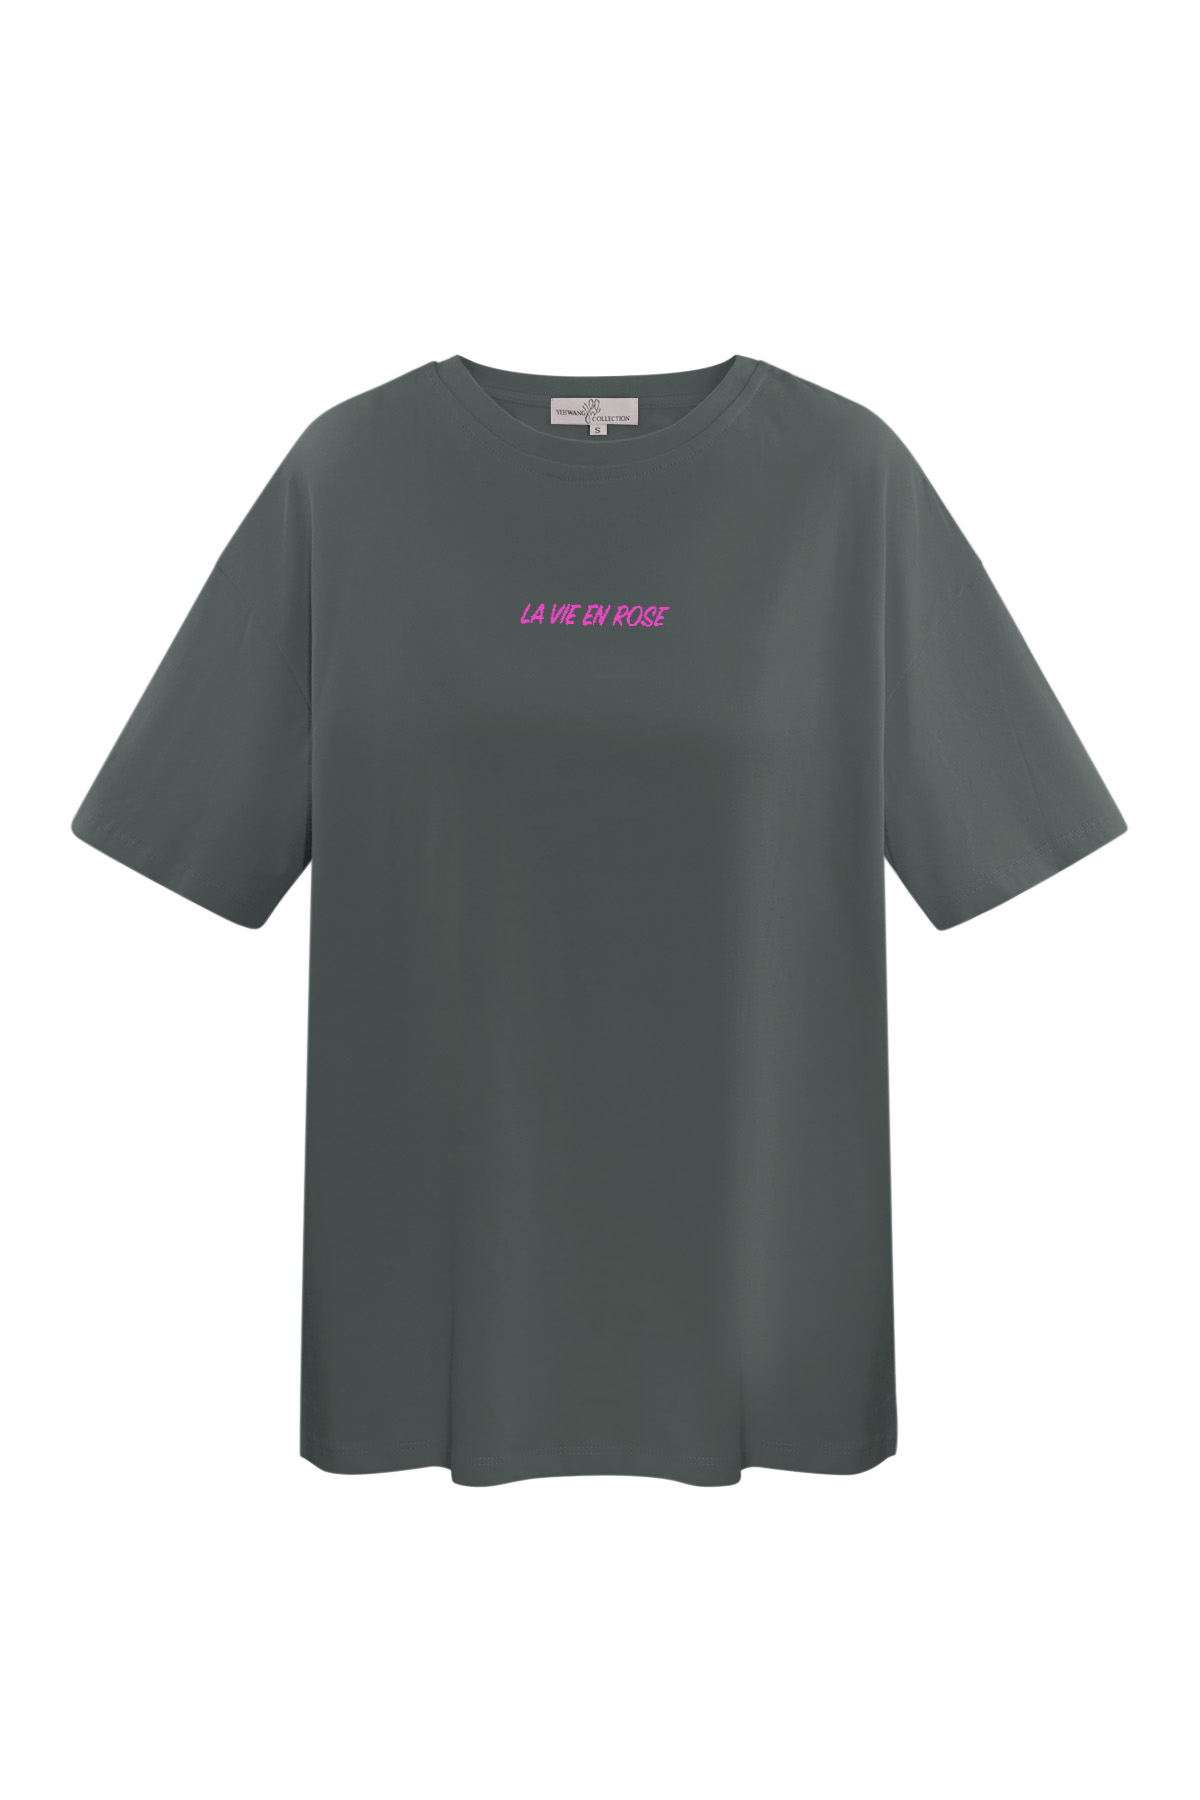 T-Shirt la vie en rose - dunkelgrau